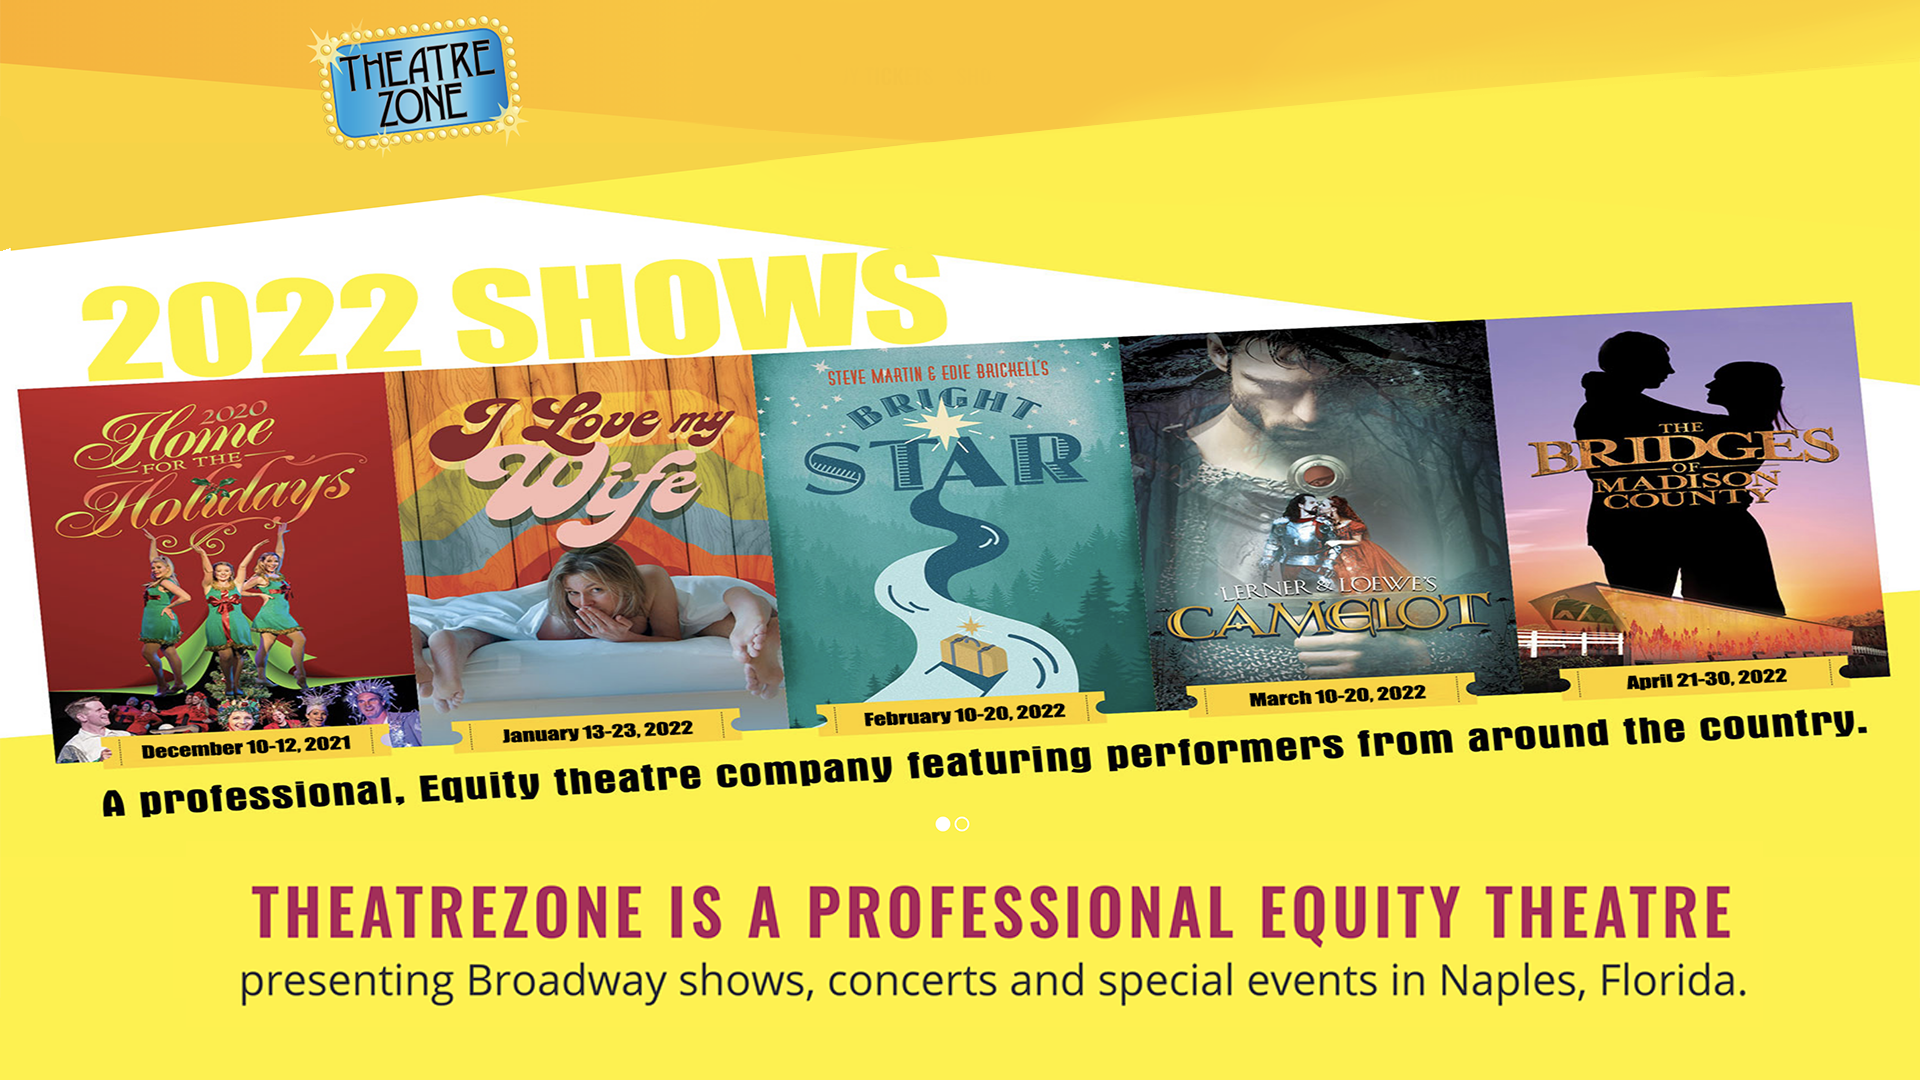 TheatreZone in Naples, FL Announces its 2021-2022 Shows &Concert Series